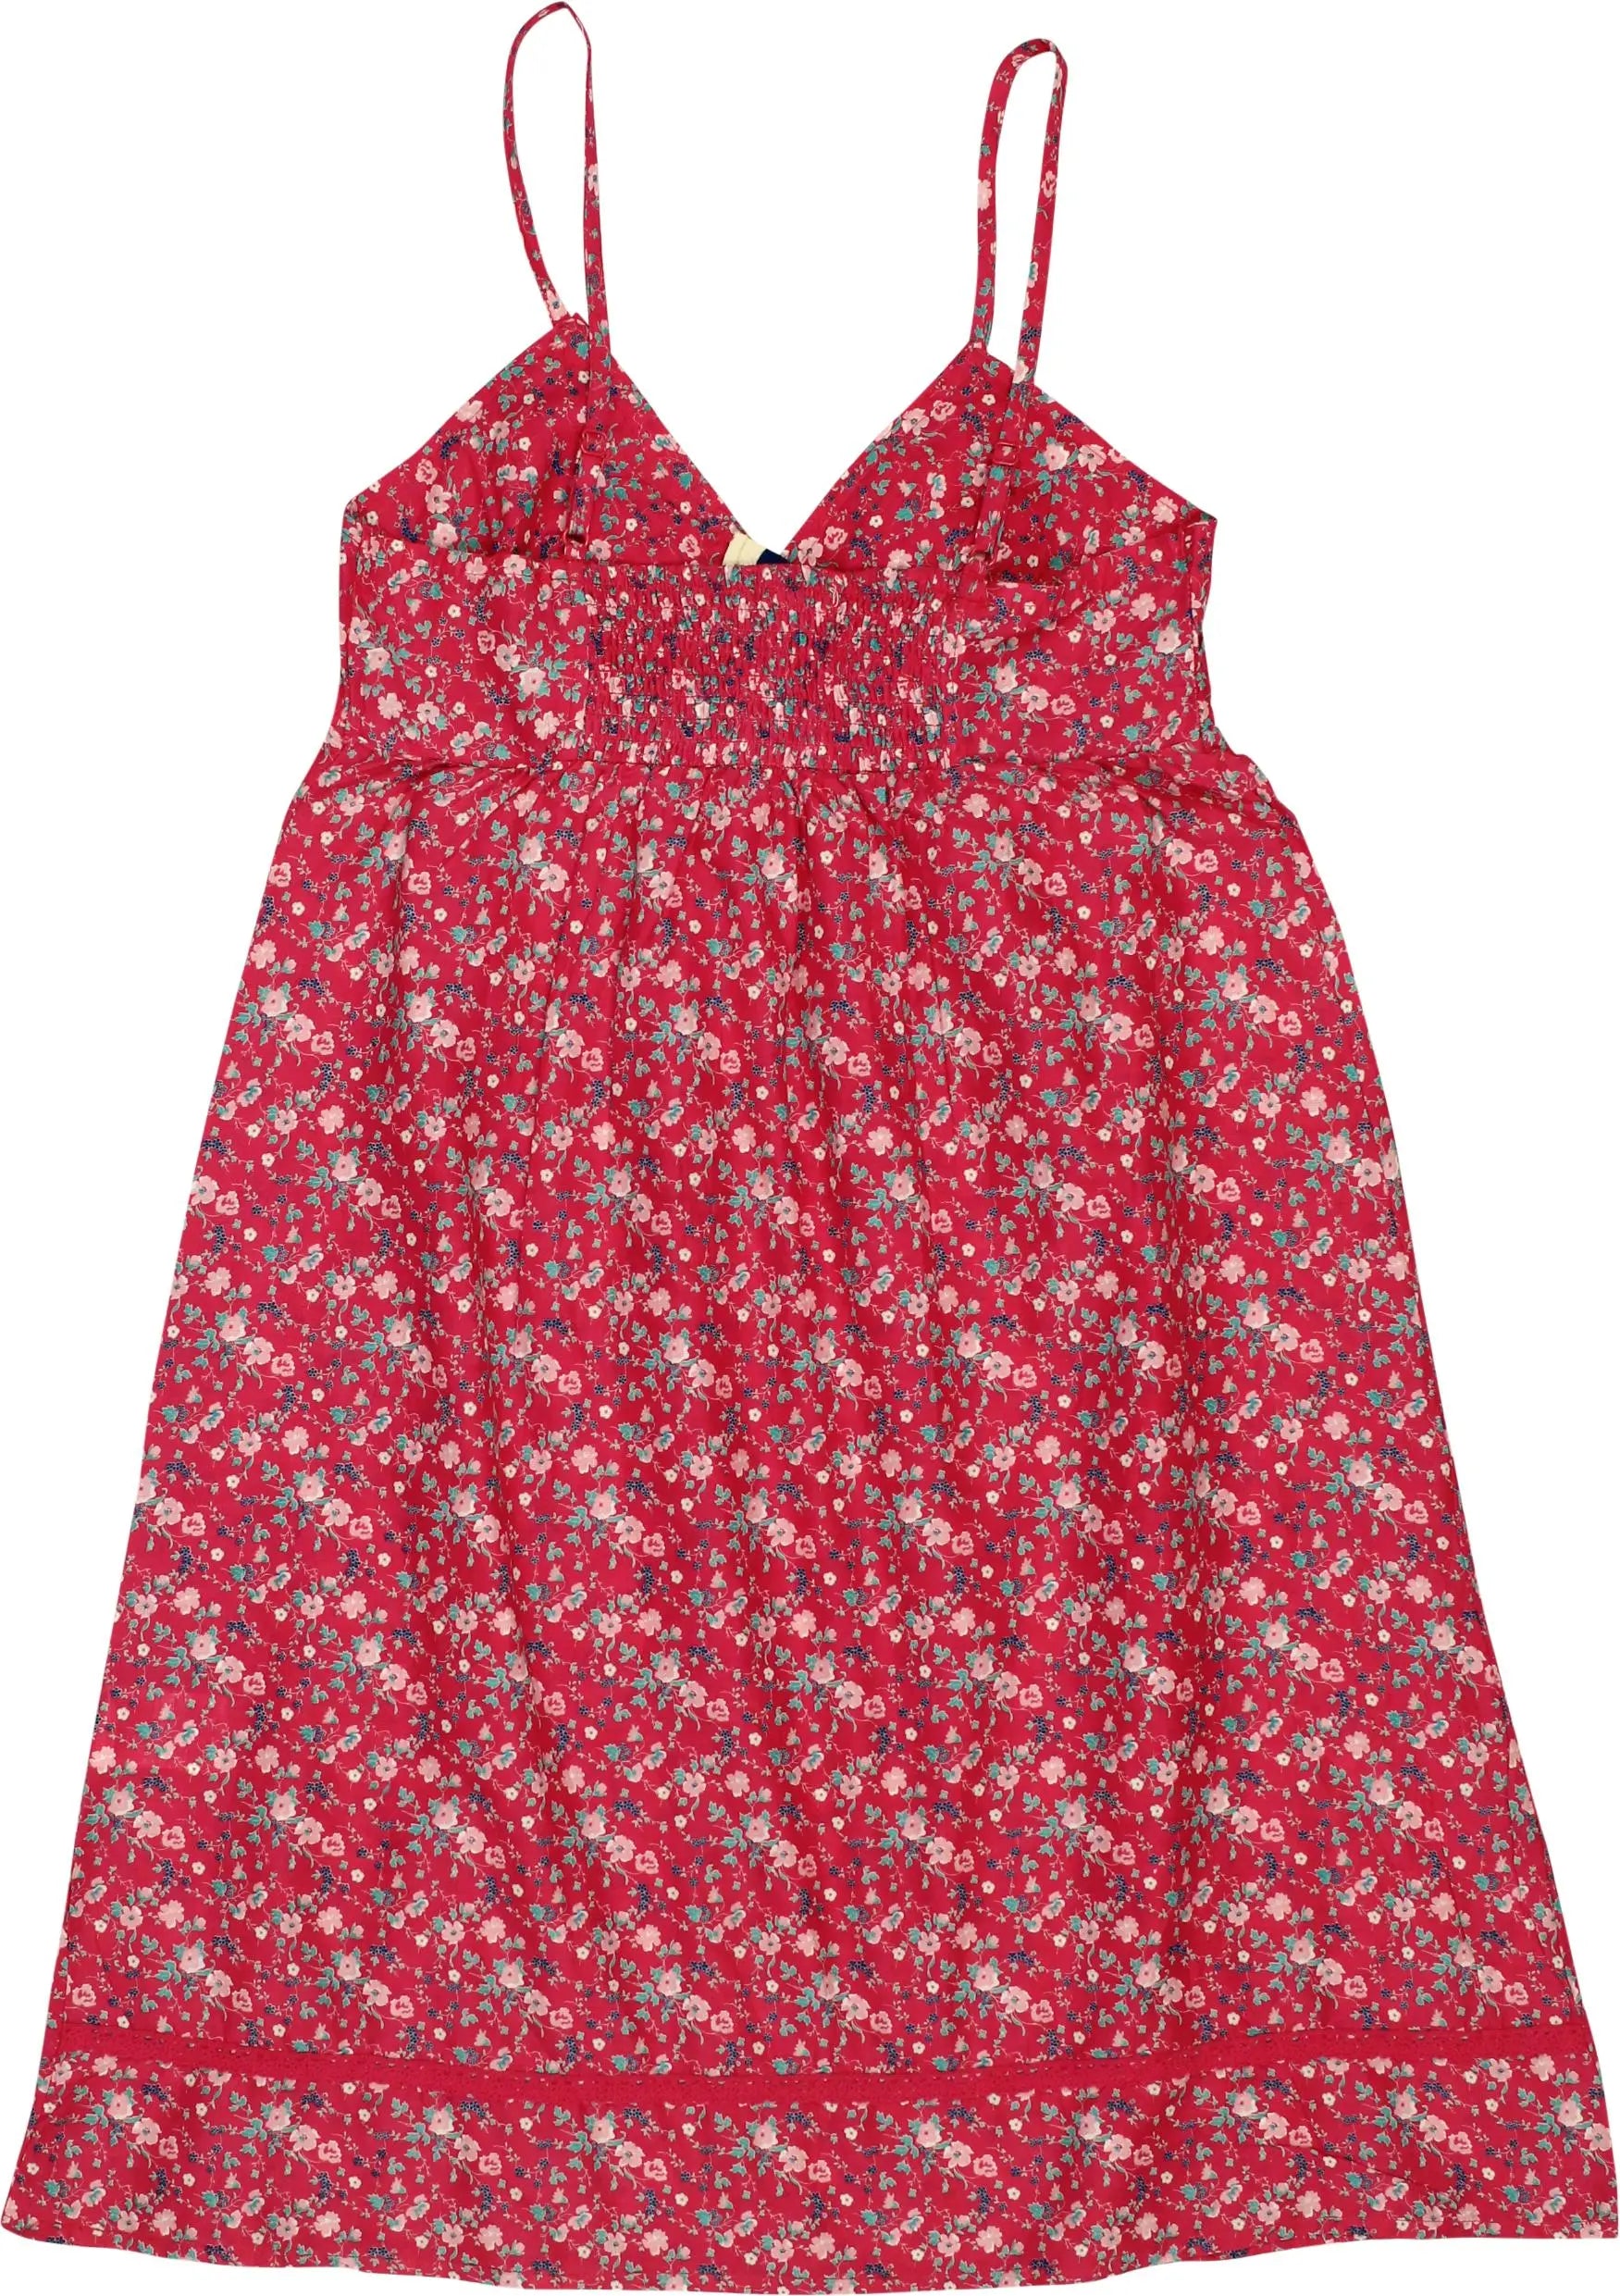 L.E.I. - Floral Dress- ThriftTale.com - Vintage and second handclothing